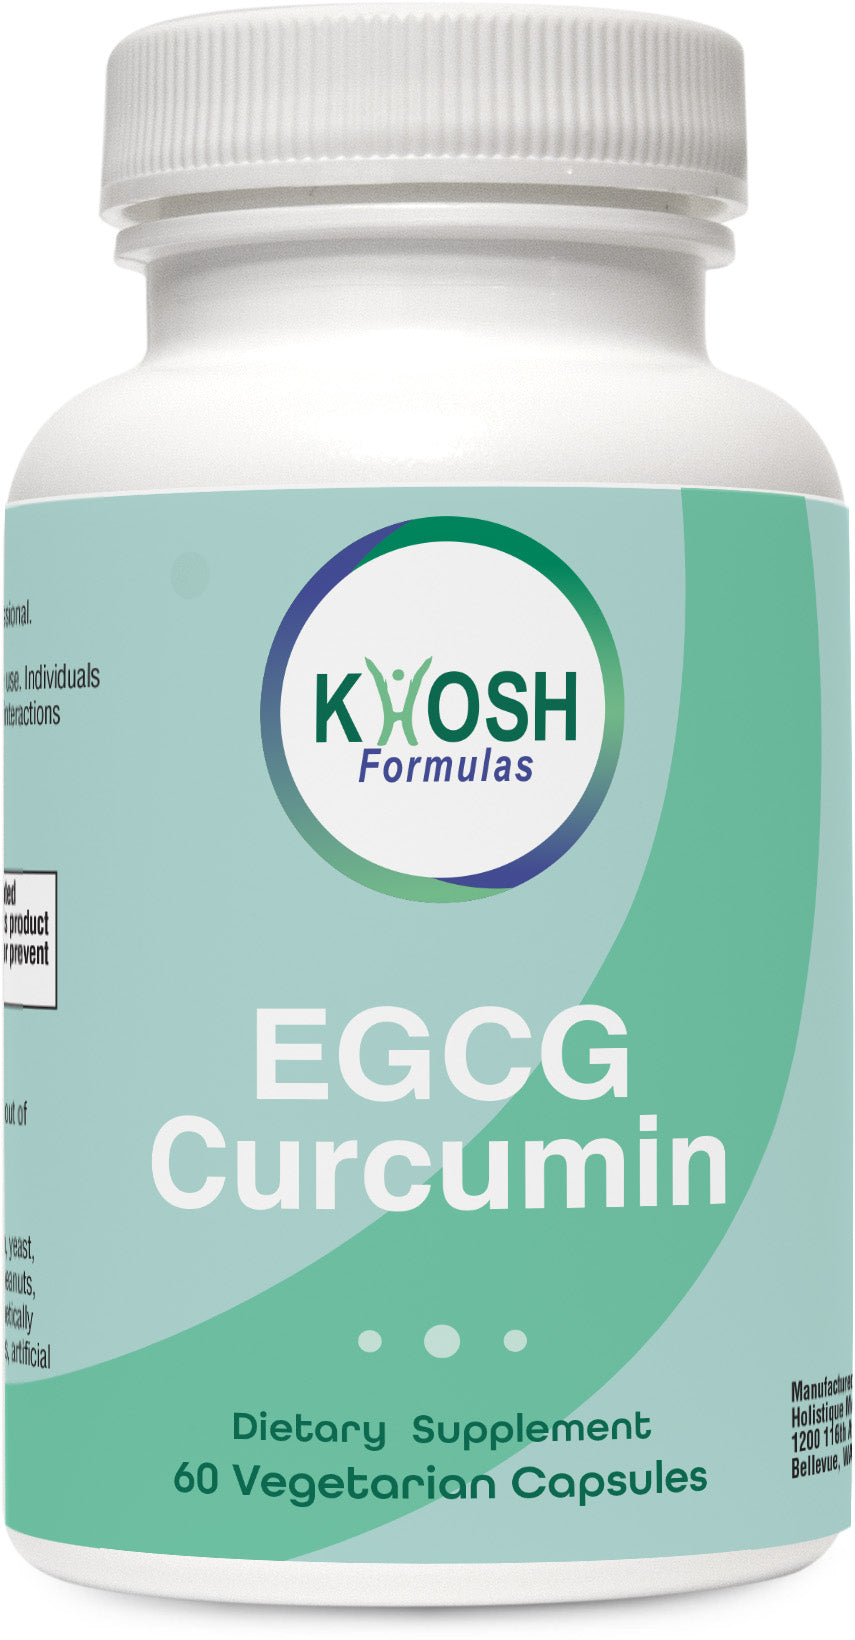 EGCG Curcumin (60 caps), KHOSH